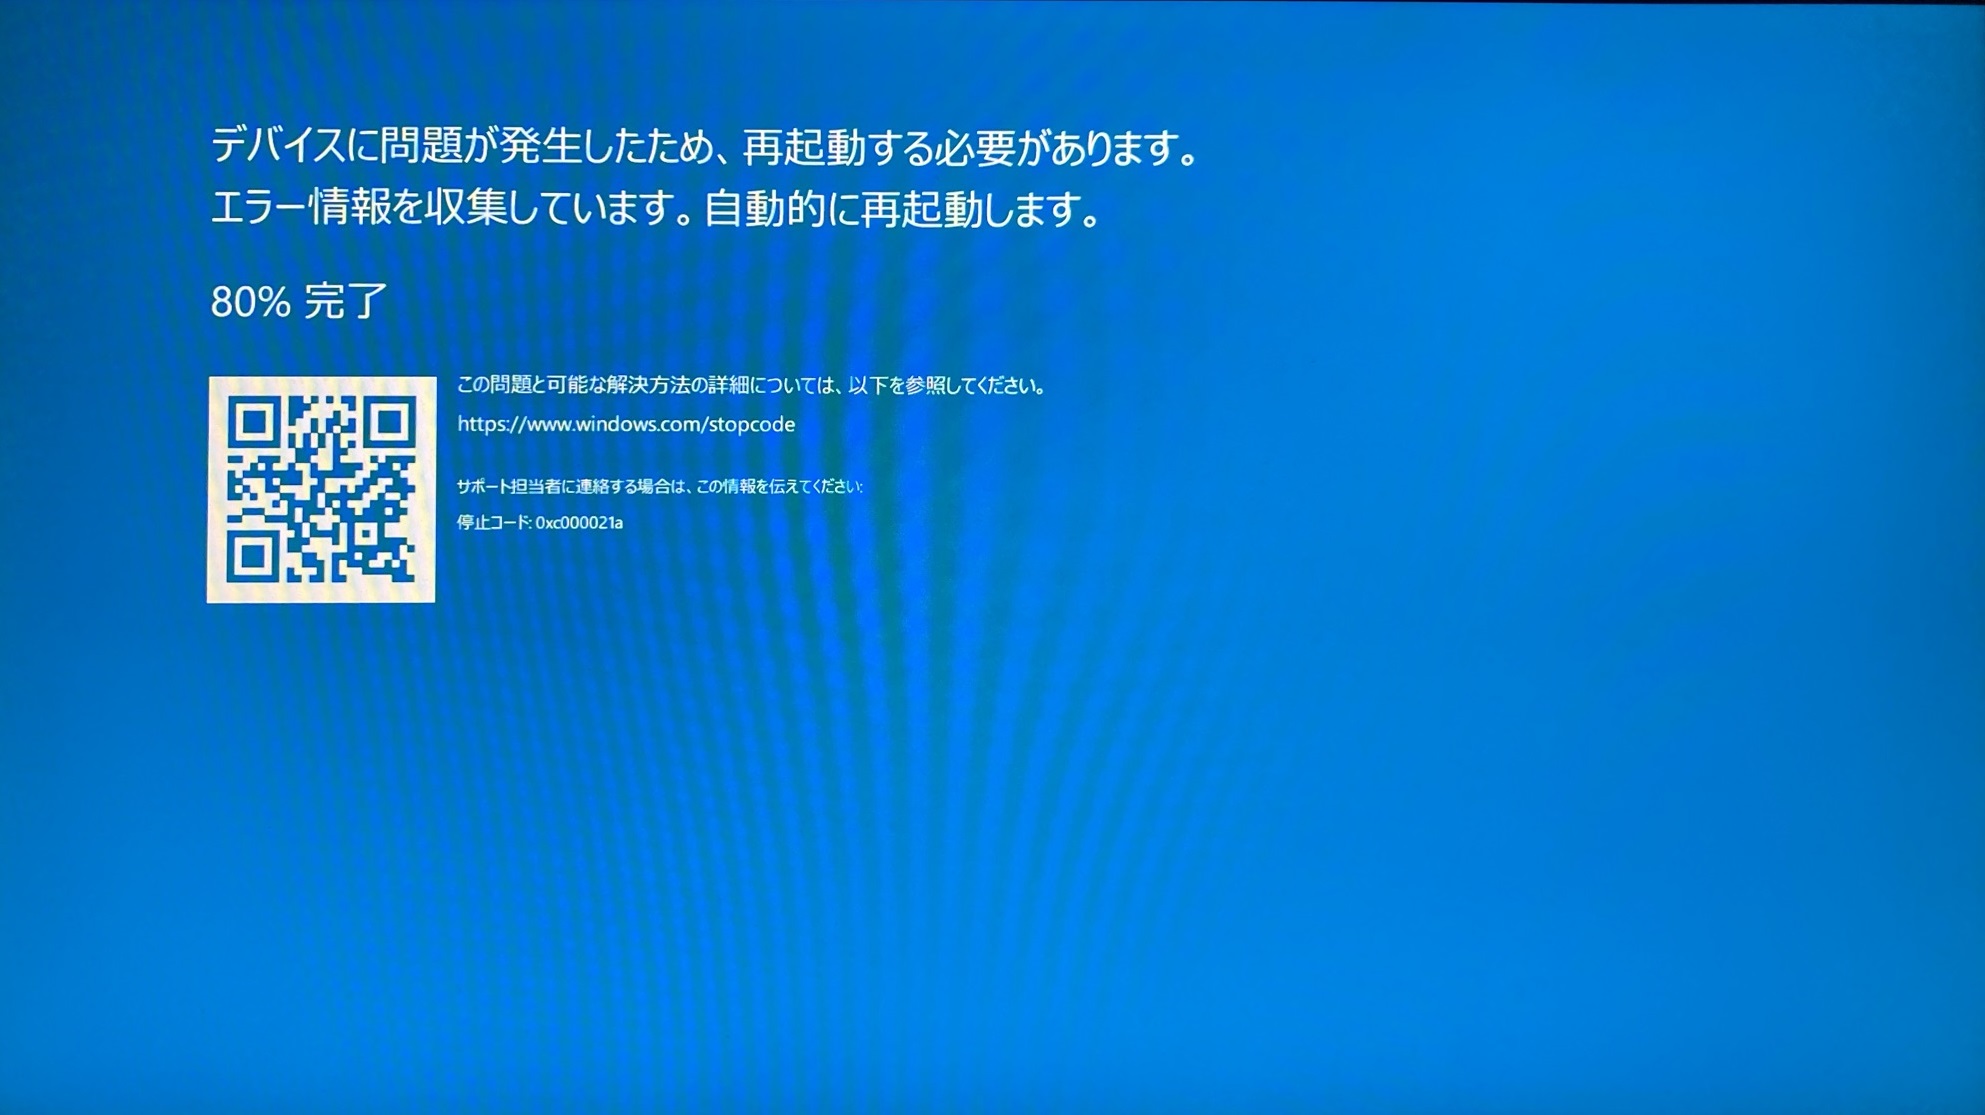 Windows10のブルースクリーン発生 大規模アップデート Windows 10 May 21 Update バージョン 21h1 が原因か モニオの部屋